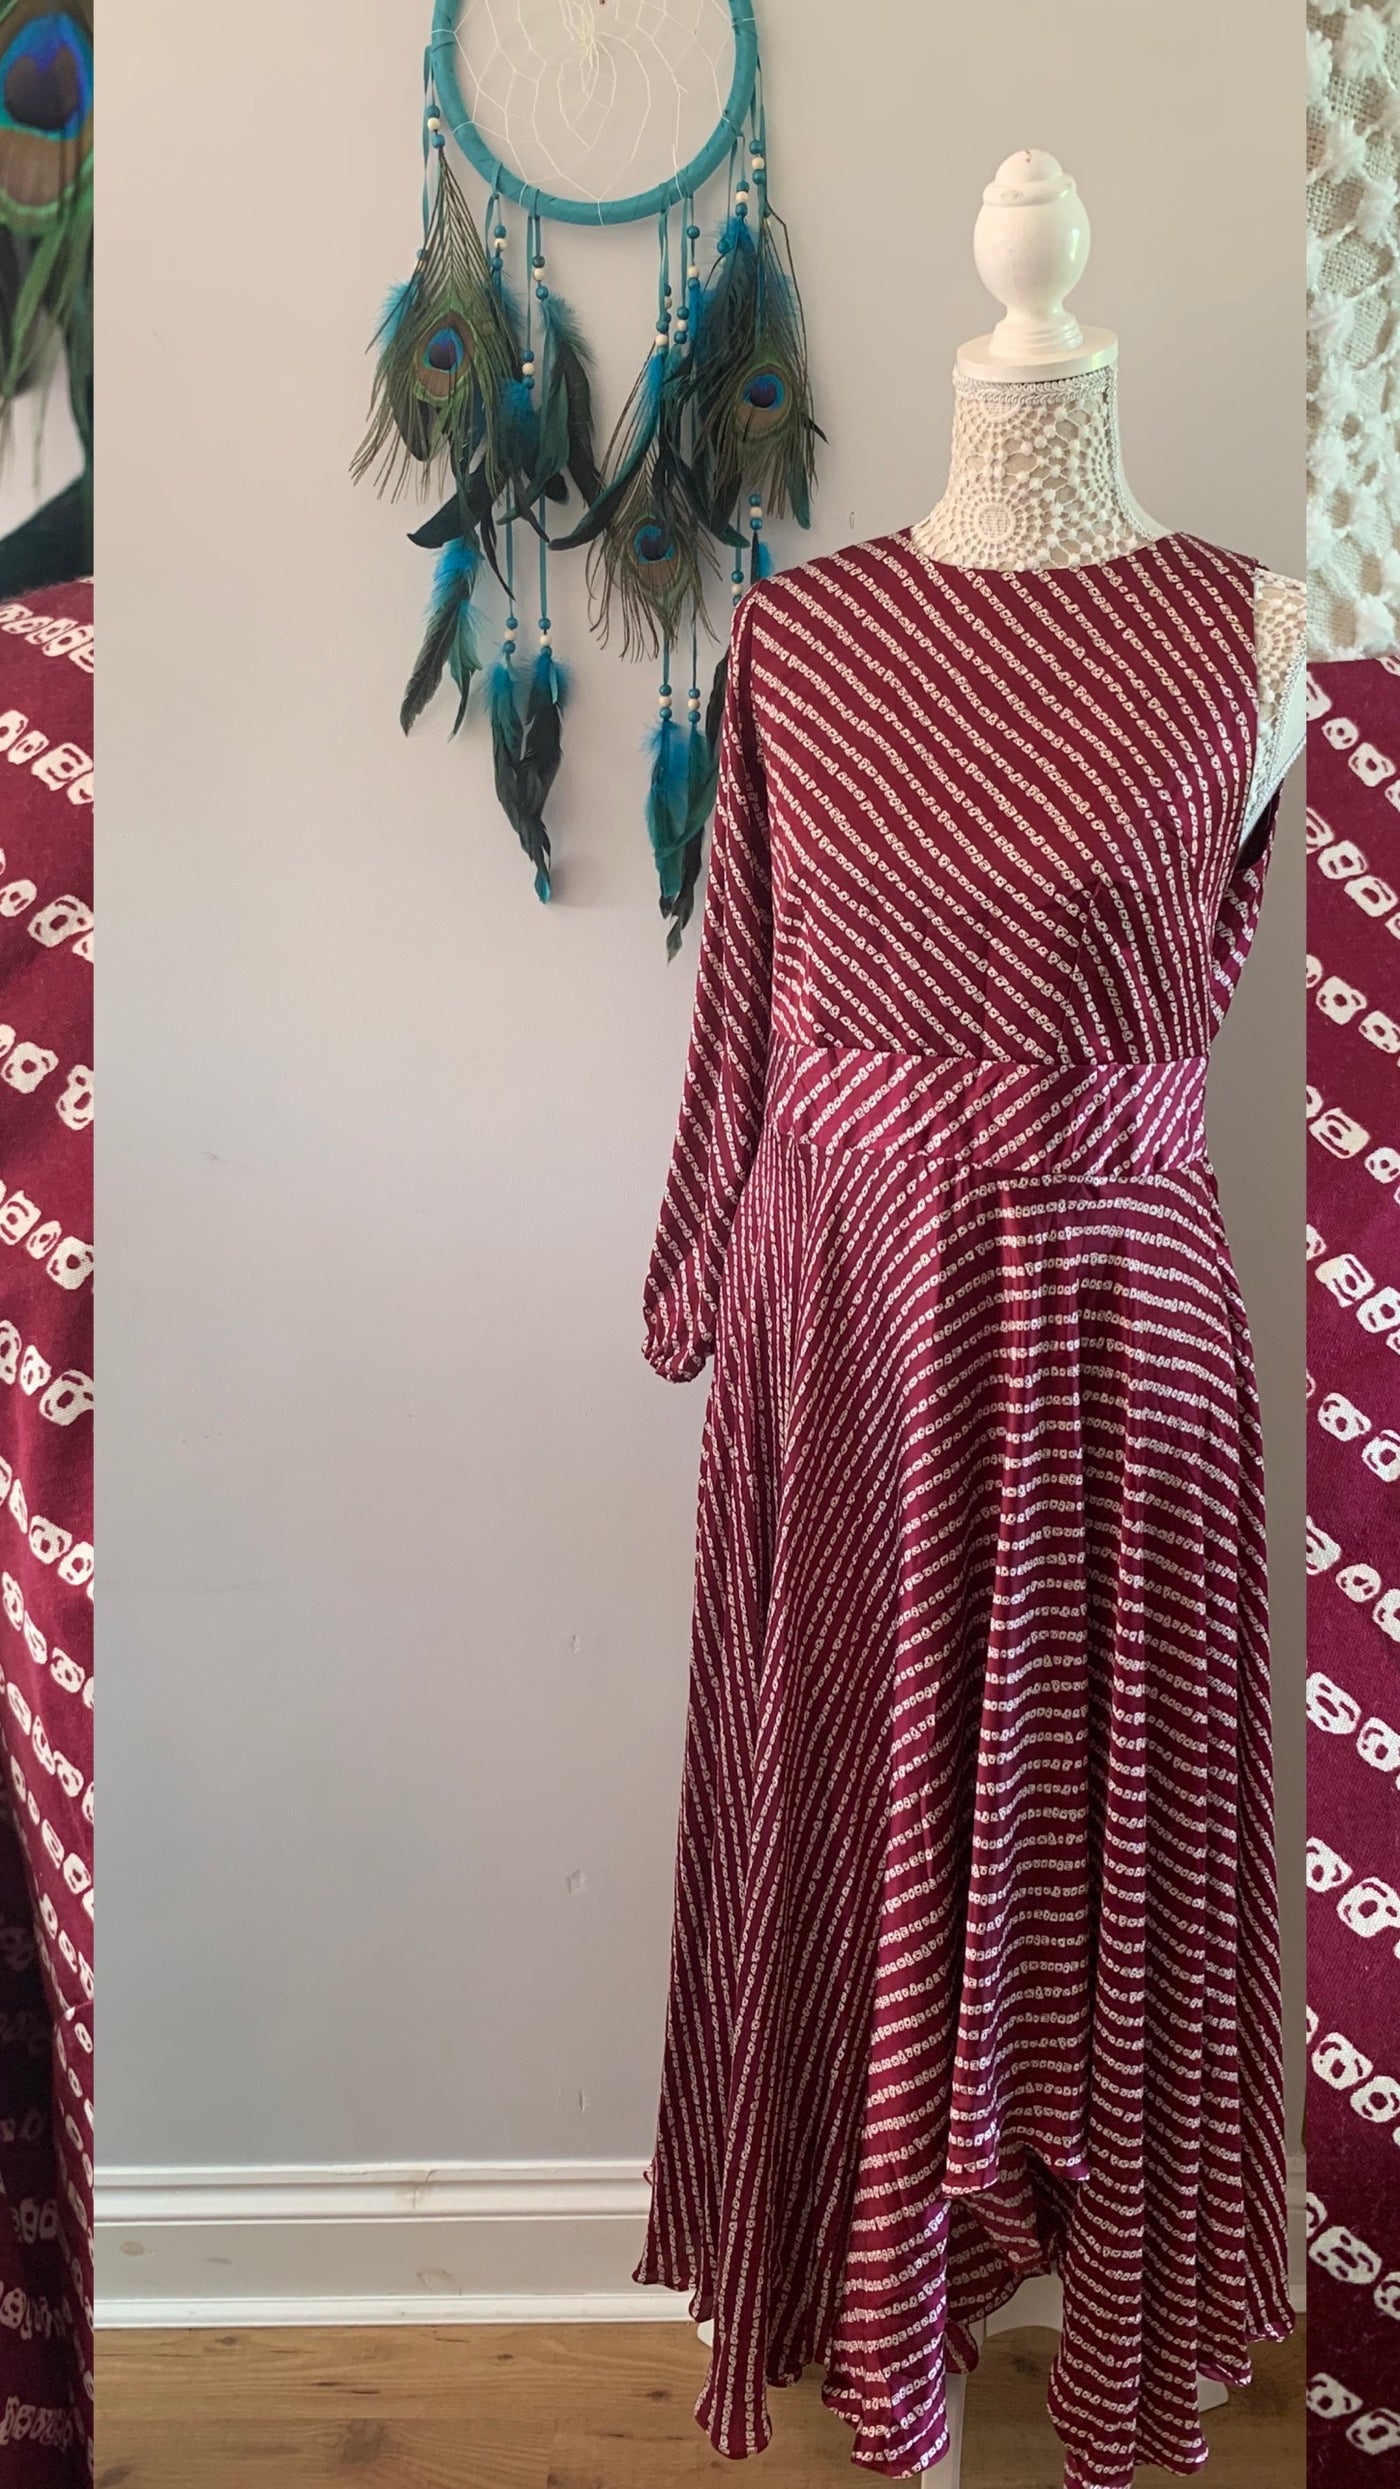 RADHI - Asymmetrical Dress Silhouette | Ready To Ship